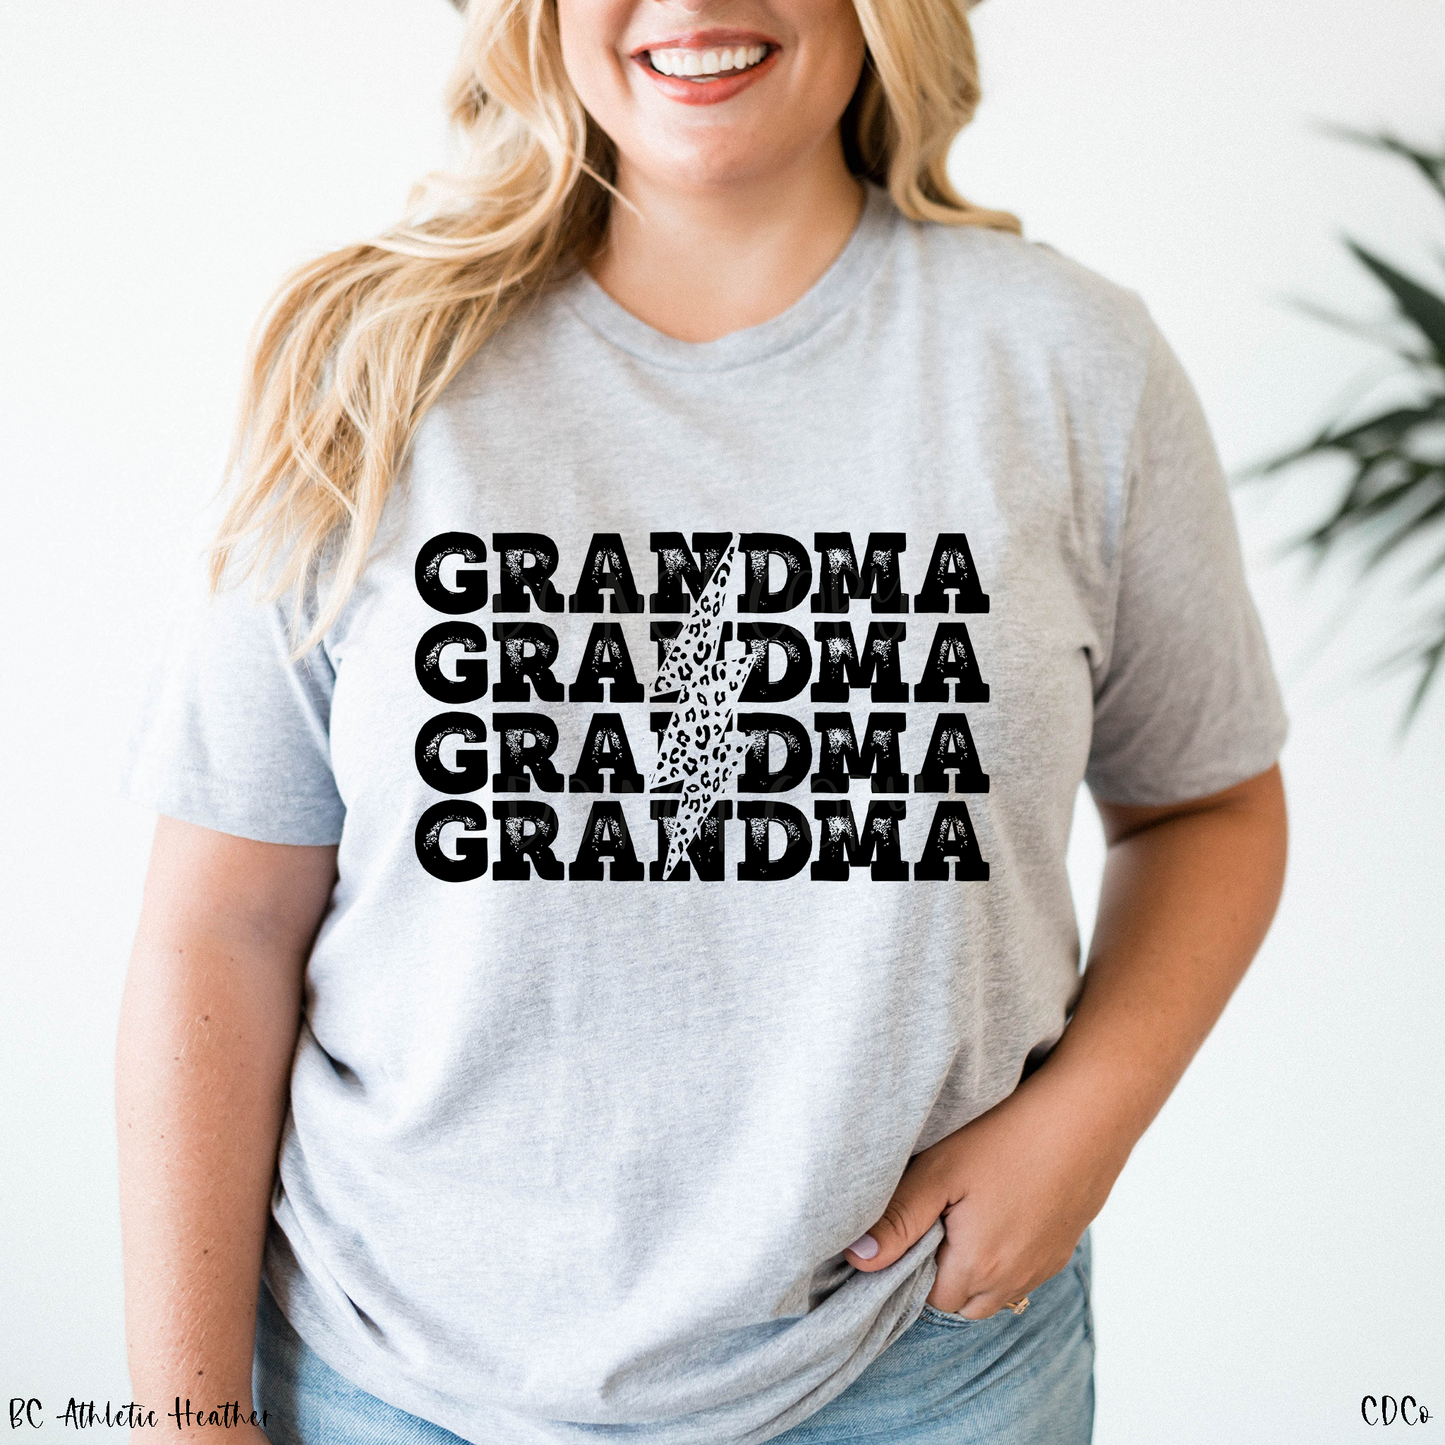 Grandma Stacked (325°)